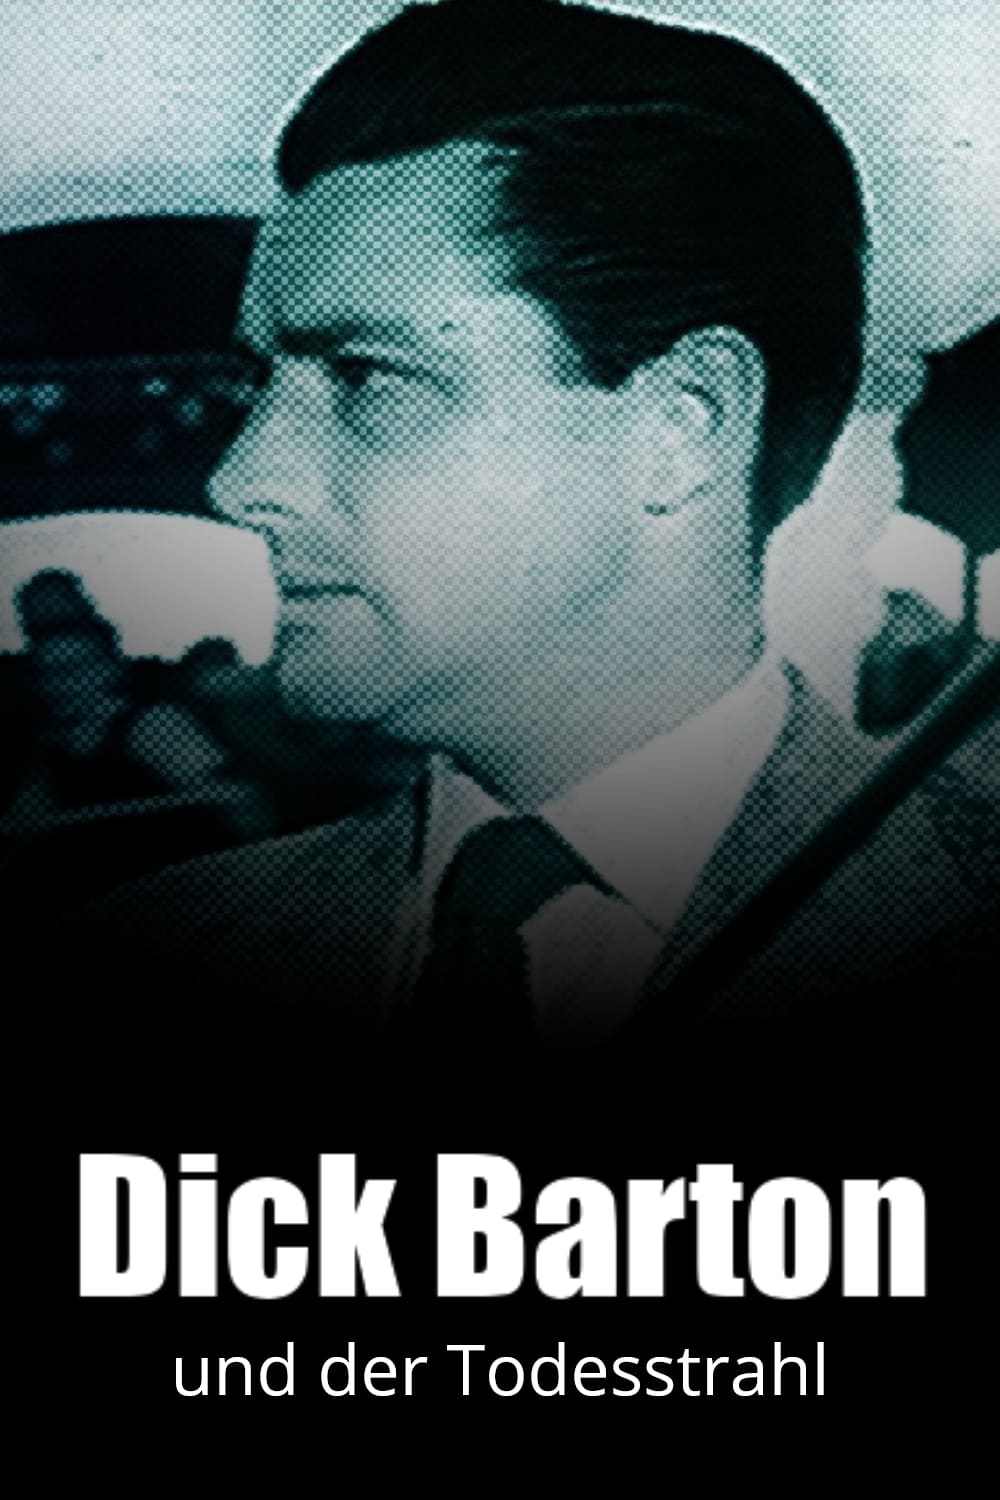 Dick barton midi